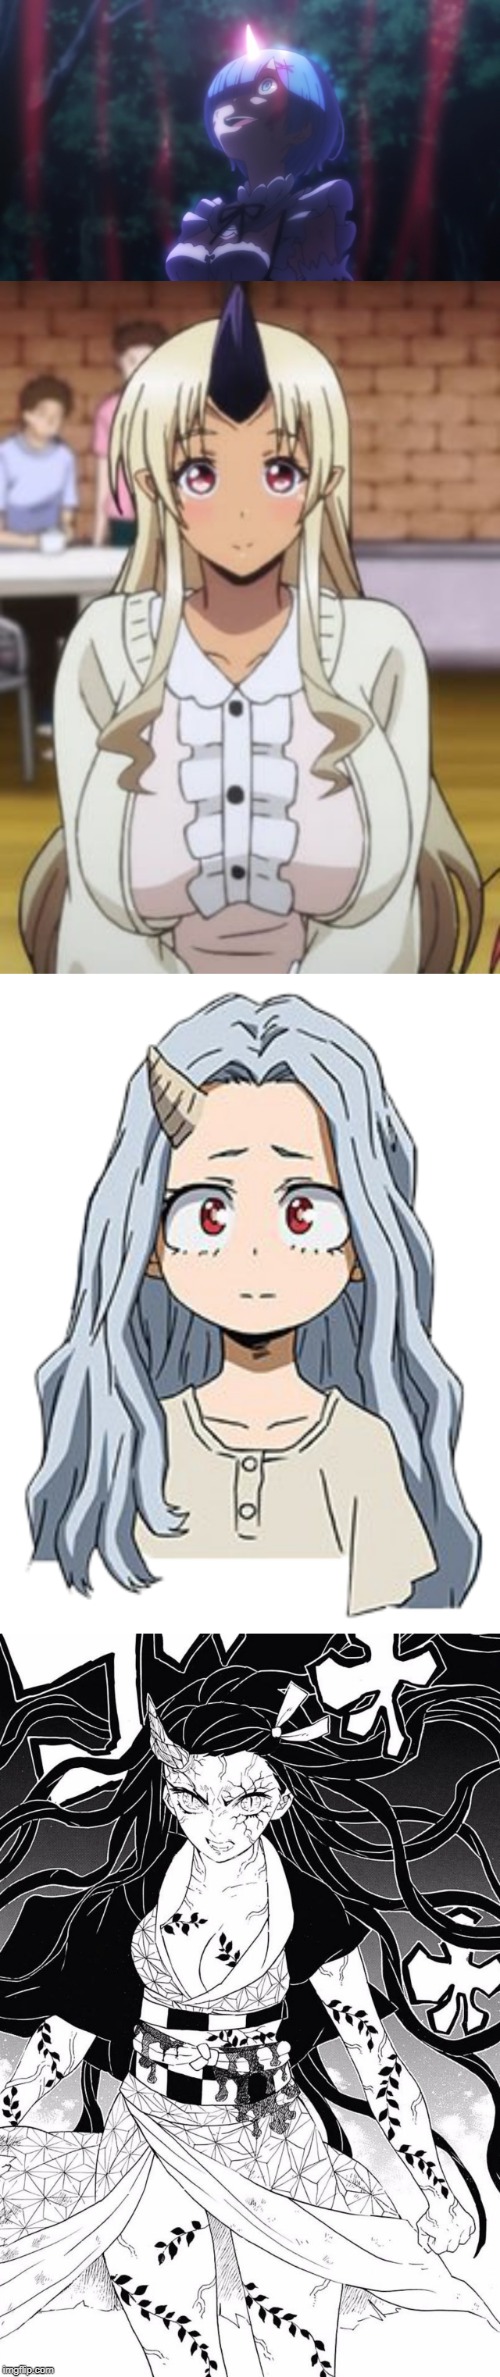 The 4 Unicorn Girls of Anime | image tagged in anime,animeme,anime meme,rezero,monster musume,my hero academia | made w/ Imgflip meme maker